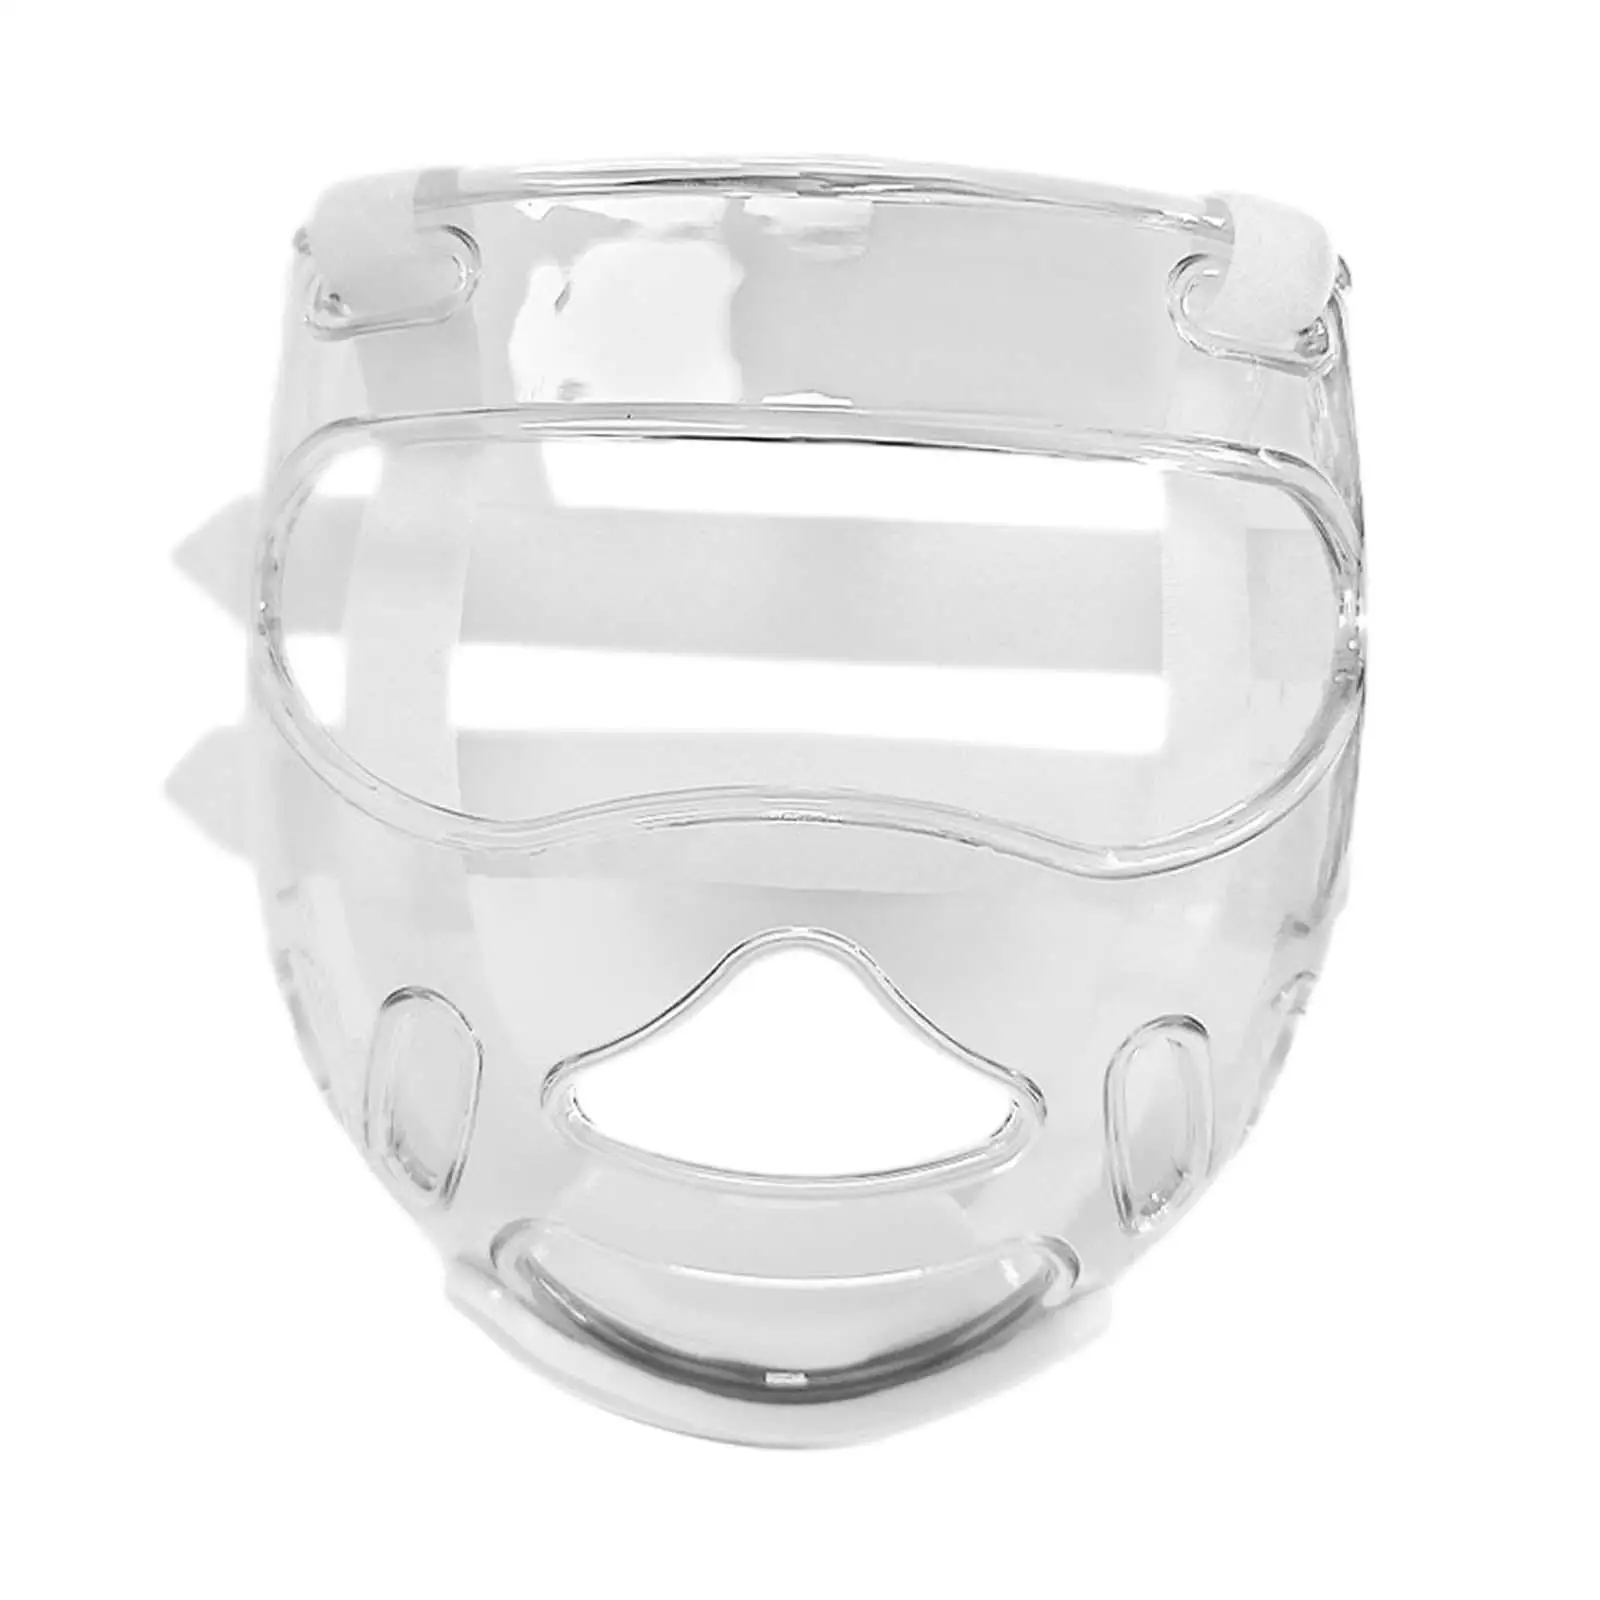 Taekwondo Face Mask Taekwondo Face Shield Portable Taekwondo Sparring Mask for Grappling Wrestling Sparring Sports Muay Thai